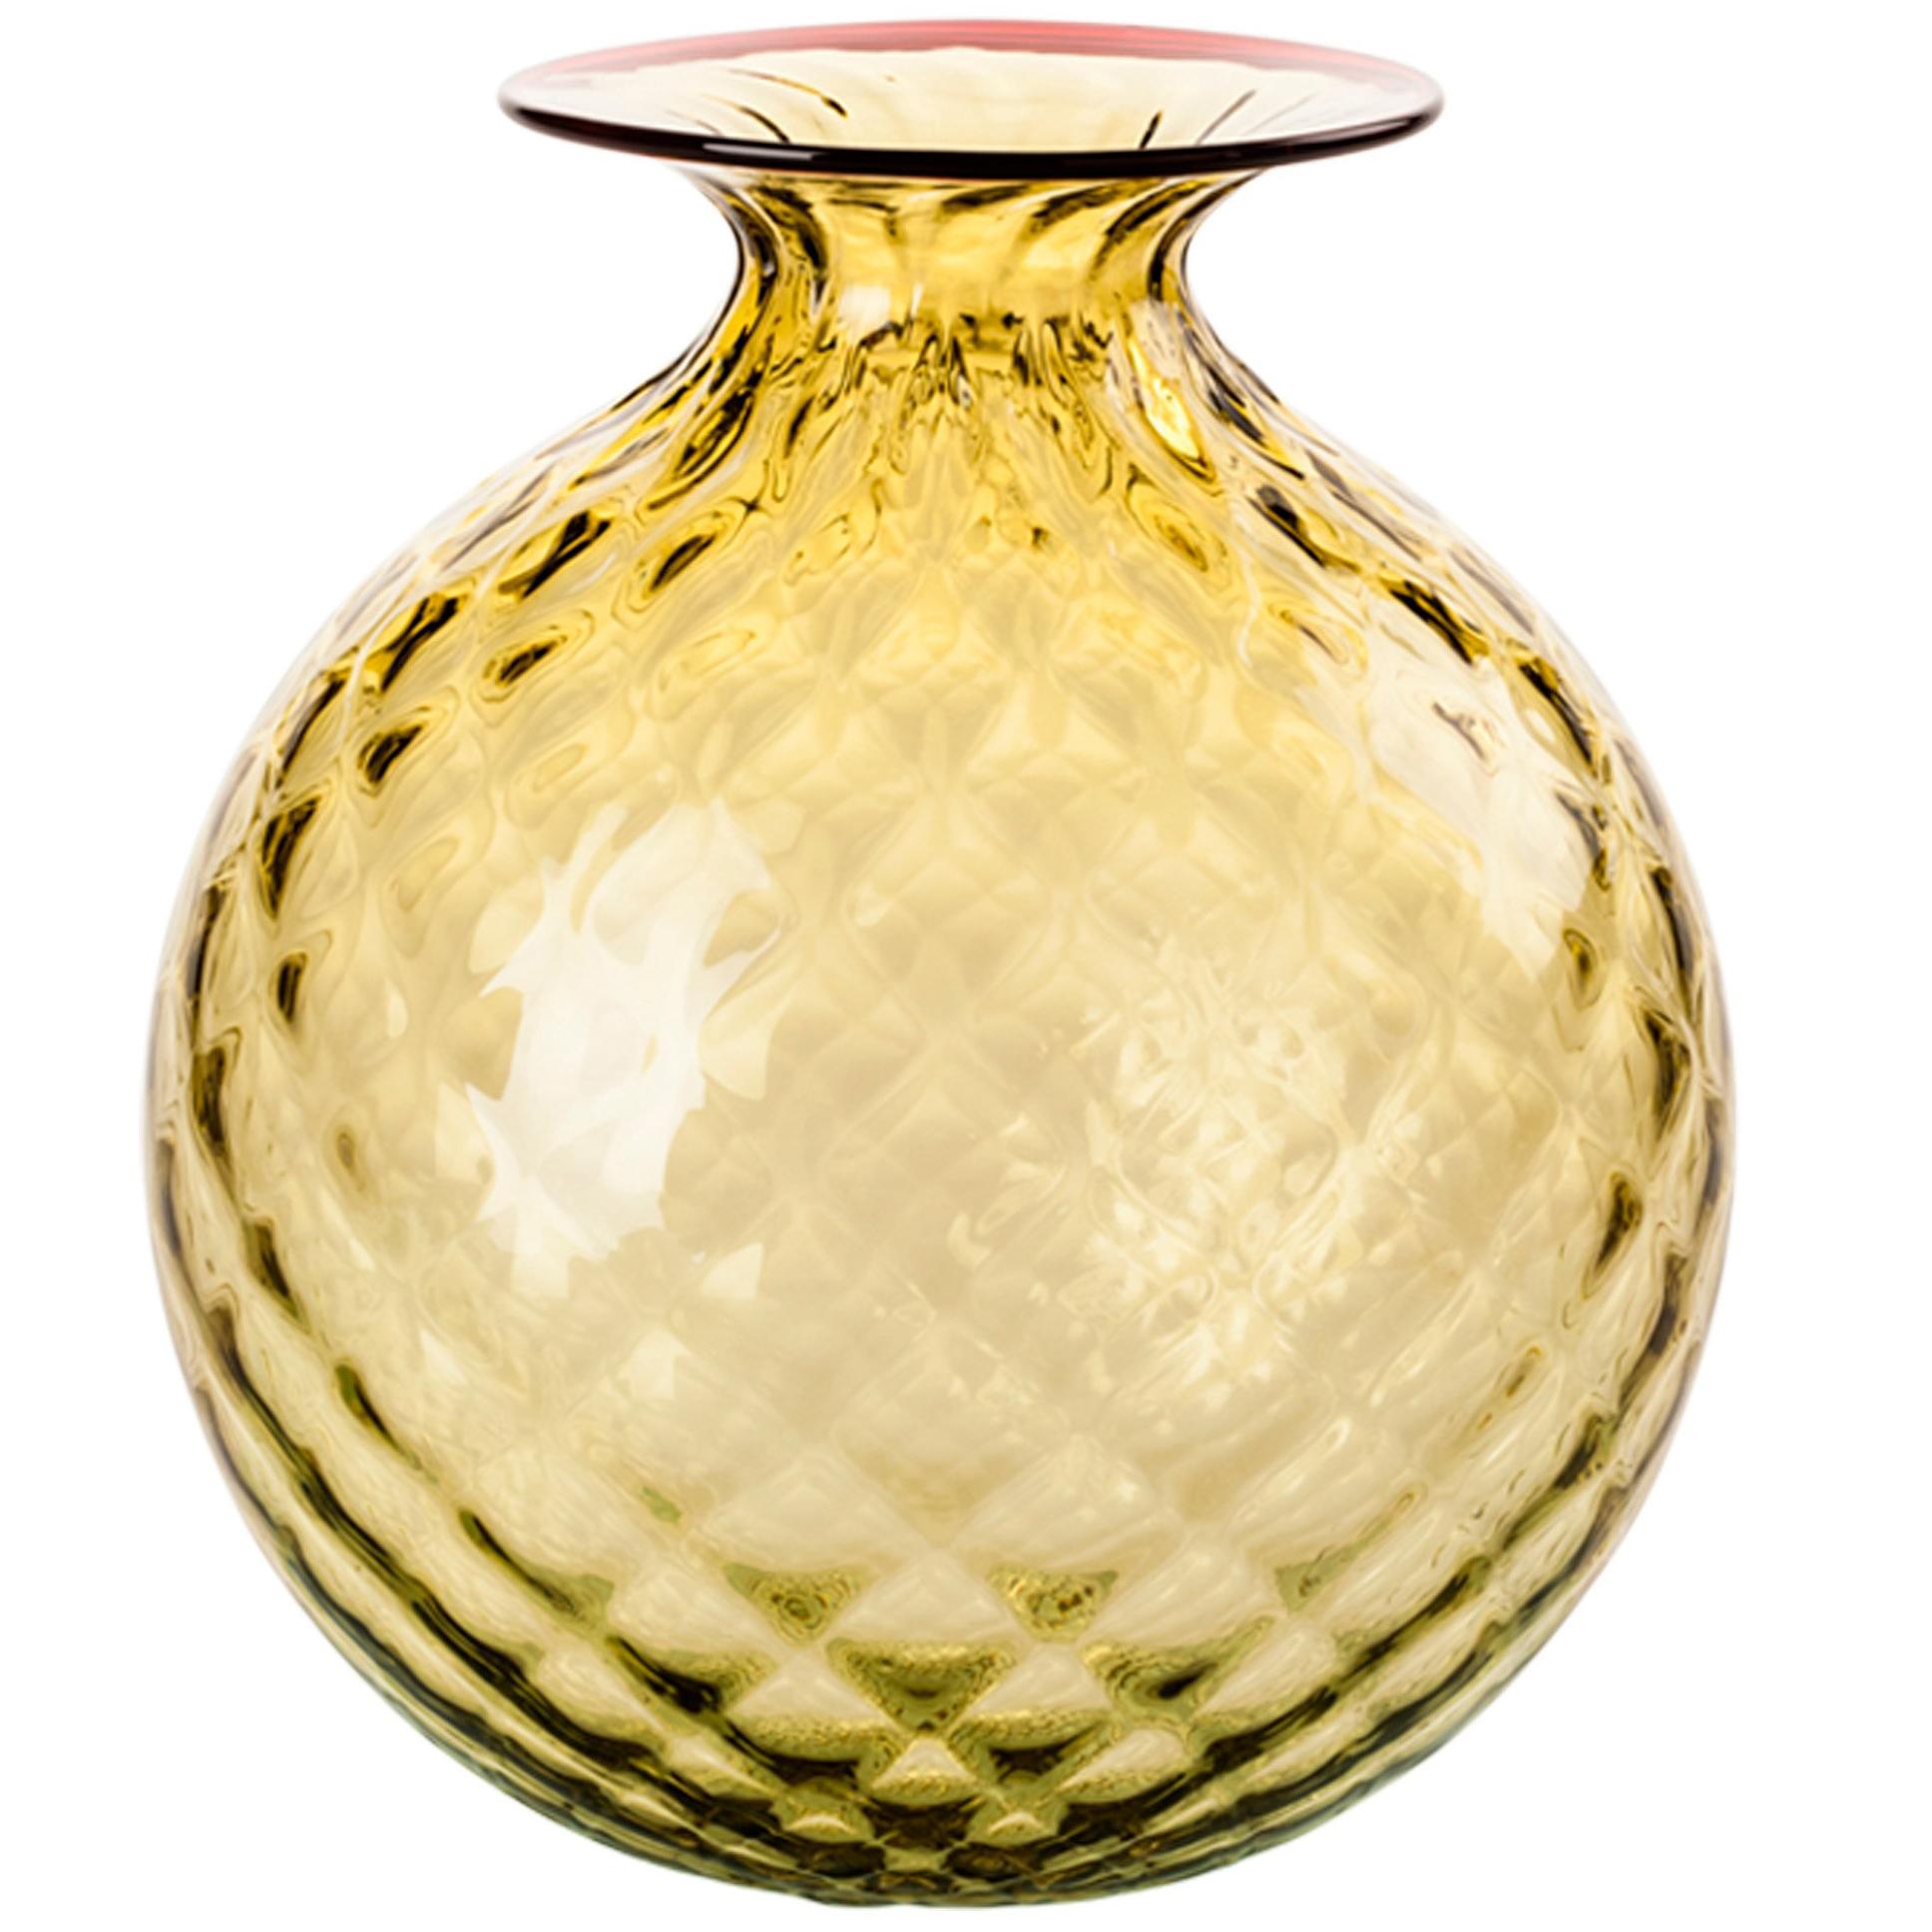 Monofiore Balloton Glass Vase in Bamboo with Red Thread Rim by Venini